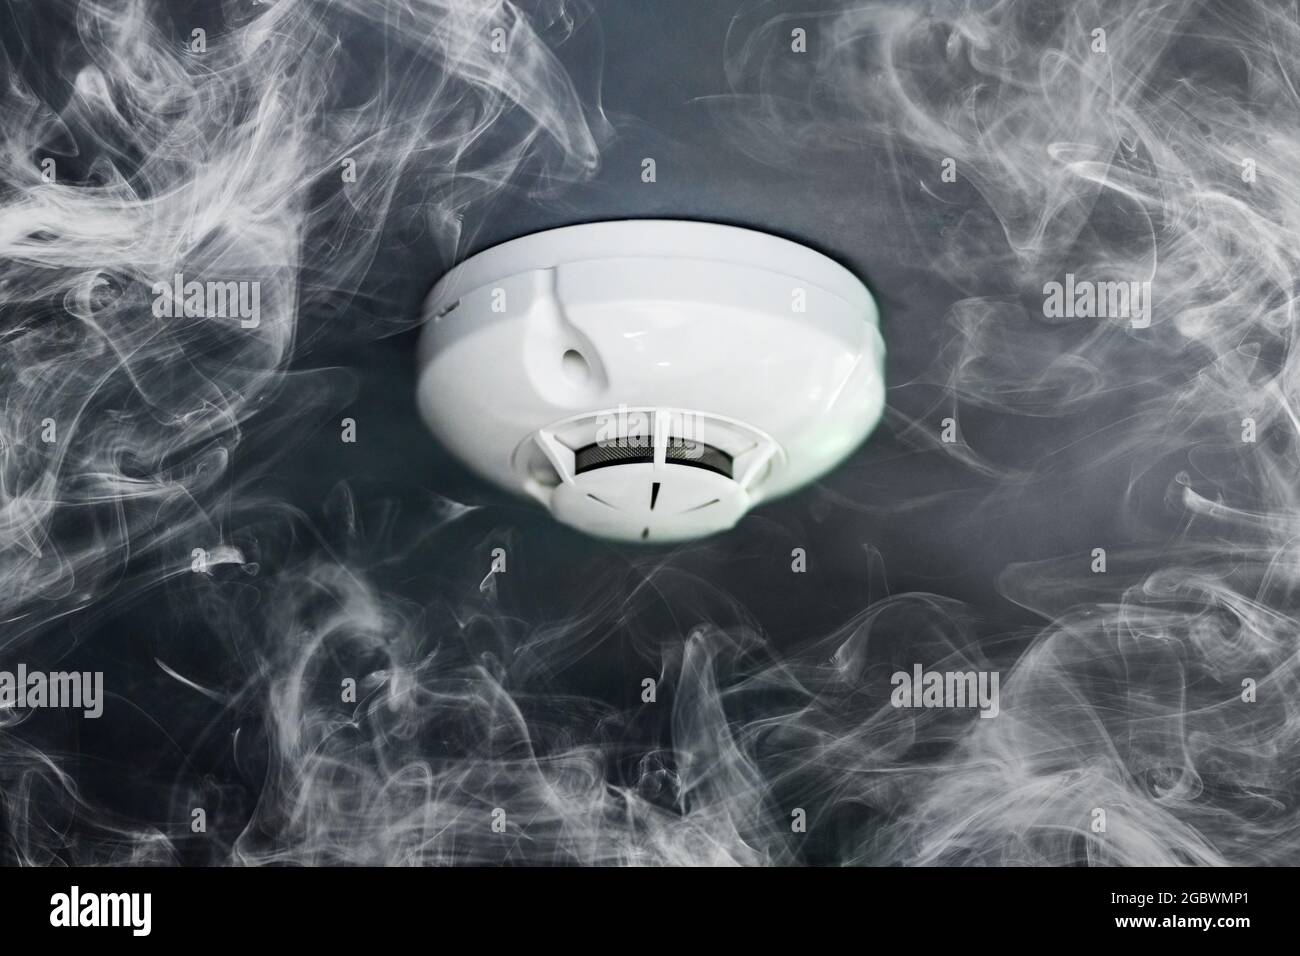 Residential Smoke Carbon Monoxide Fire Alarm Detector Stock Photo